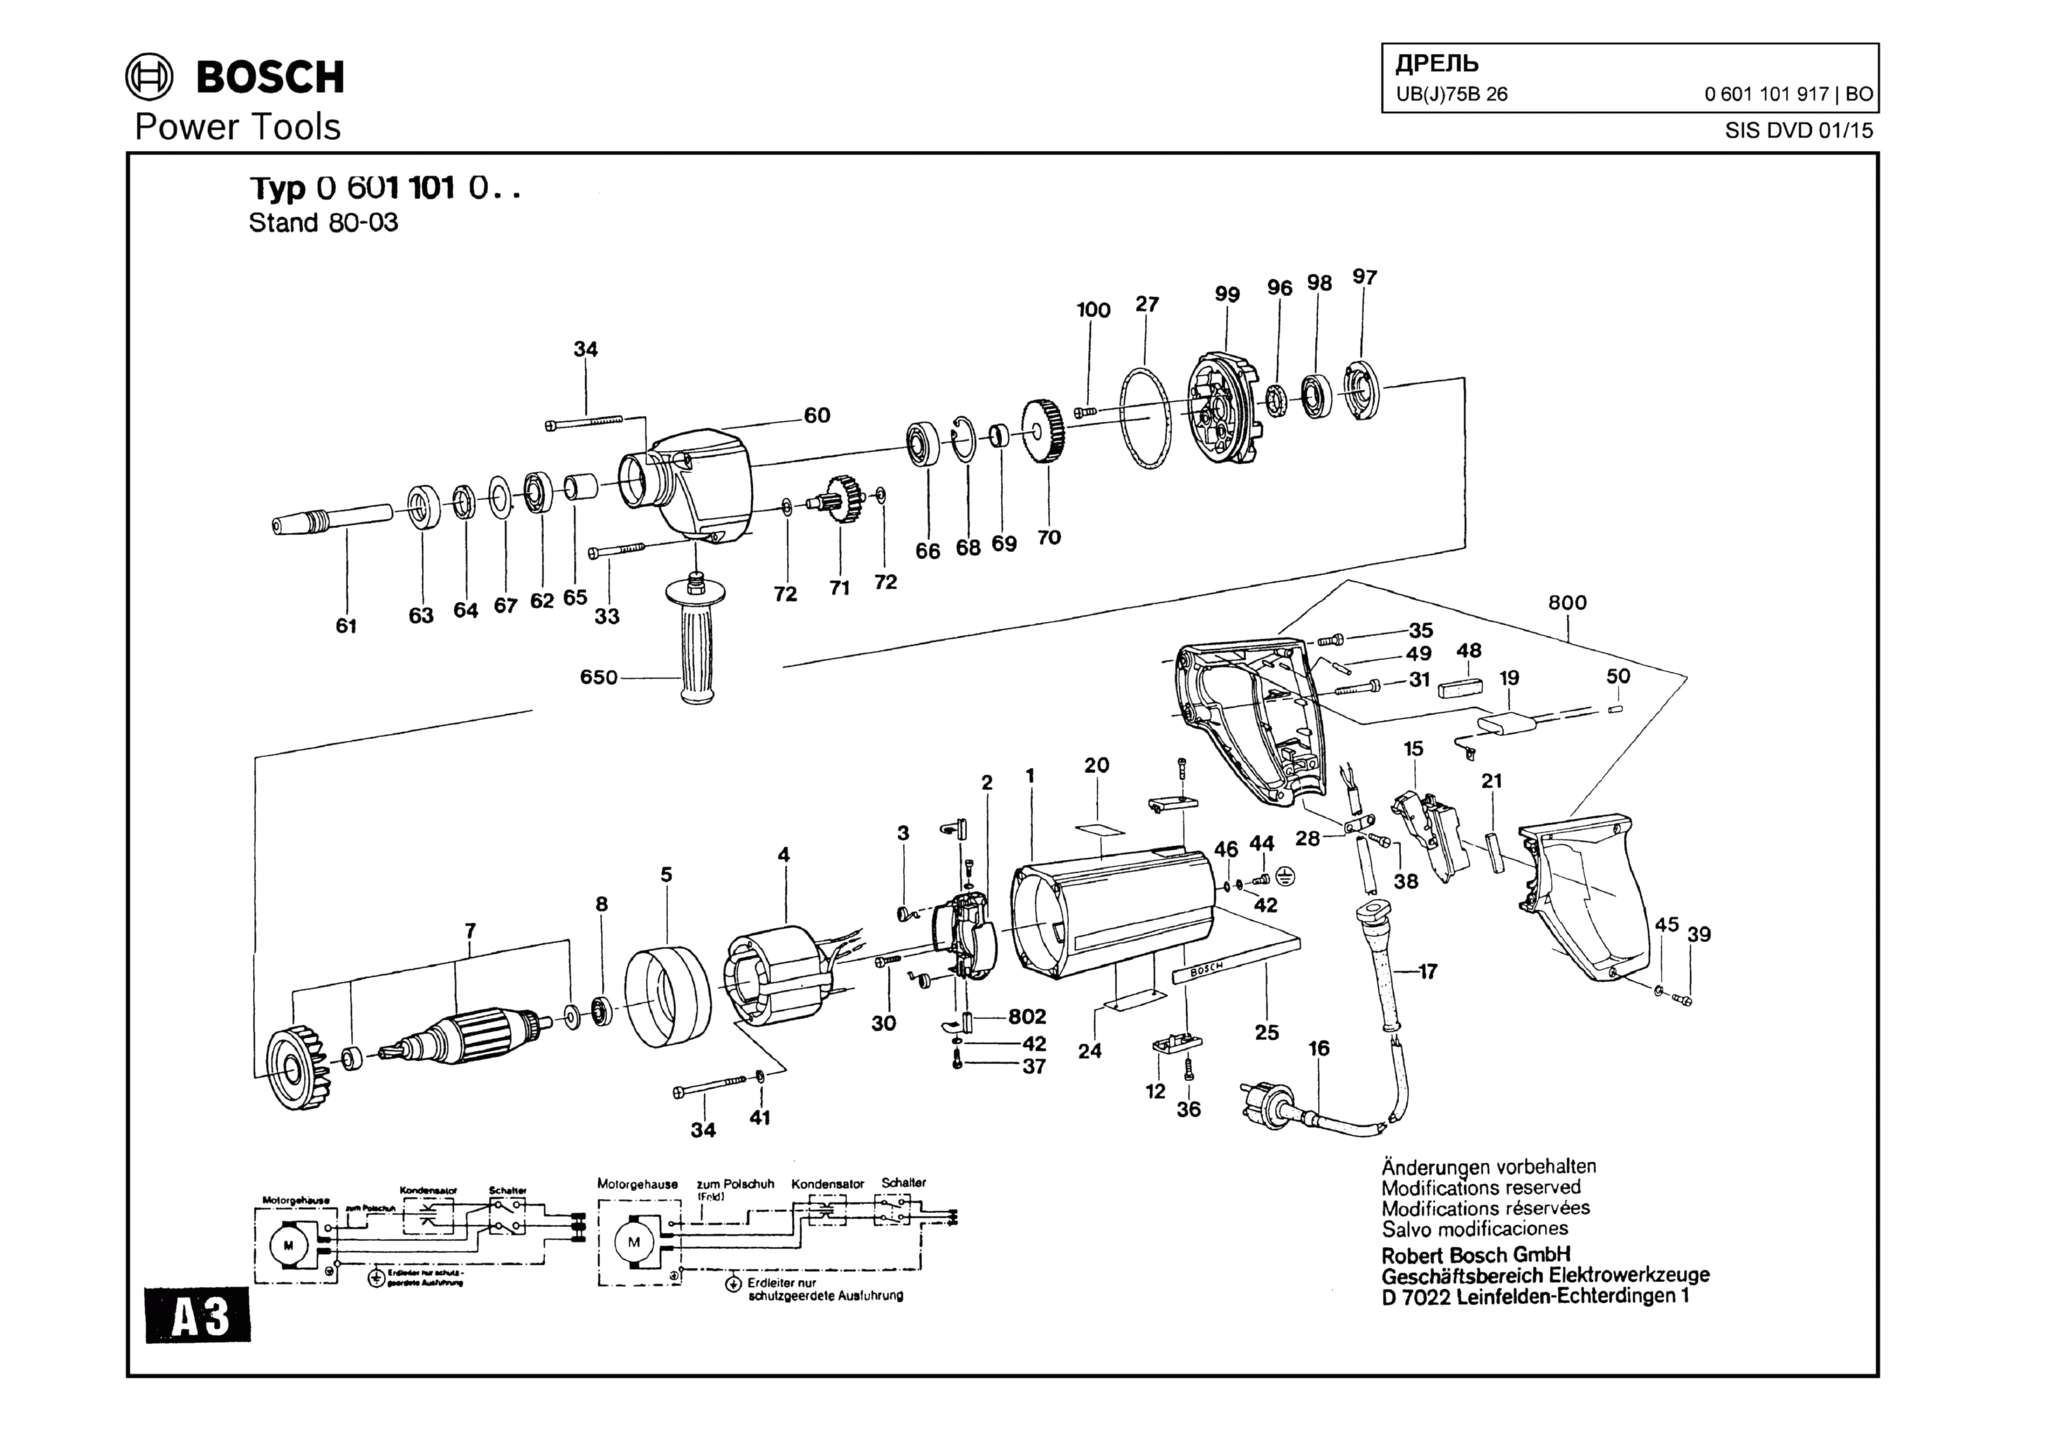 Запчасти, схема и деталировка Bosch UB(J)75B 26 (ТИП 0601101917)